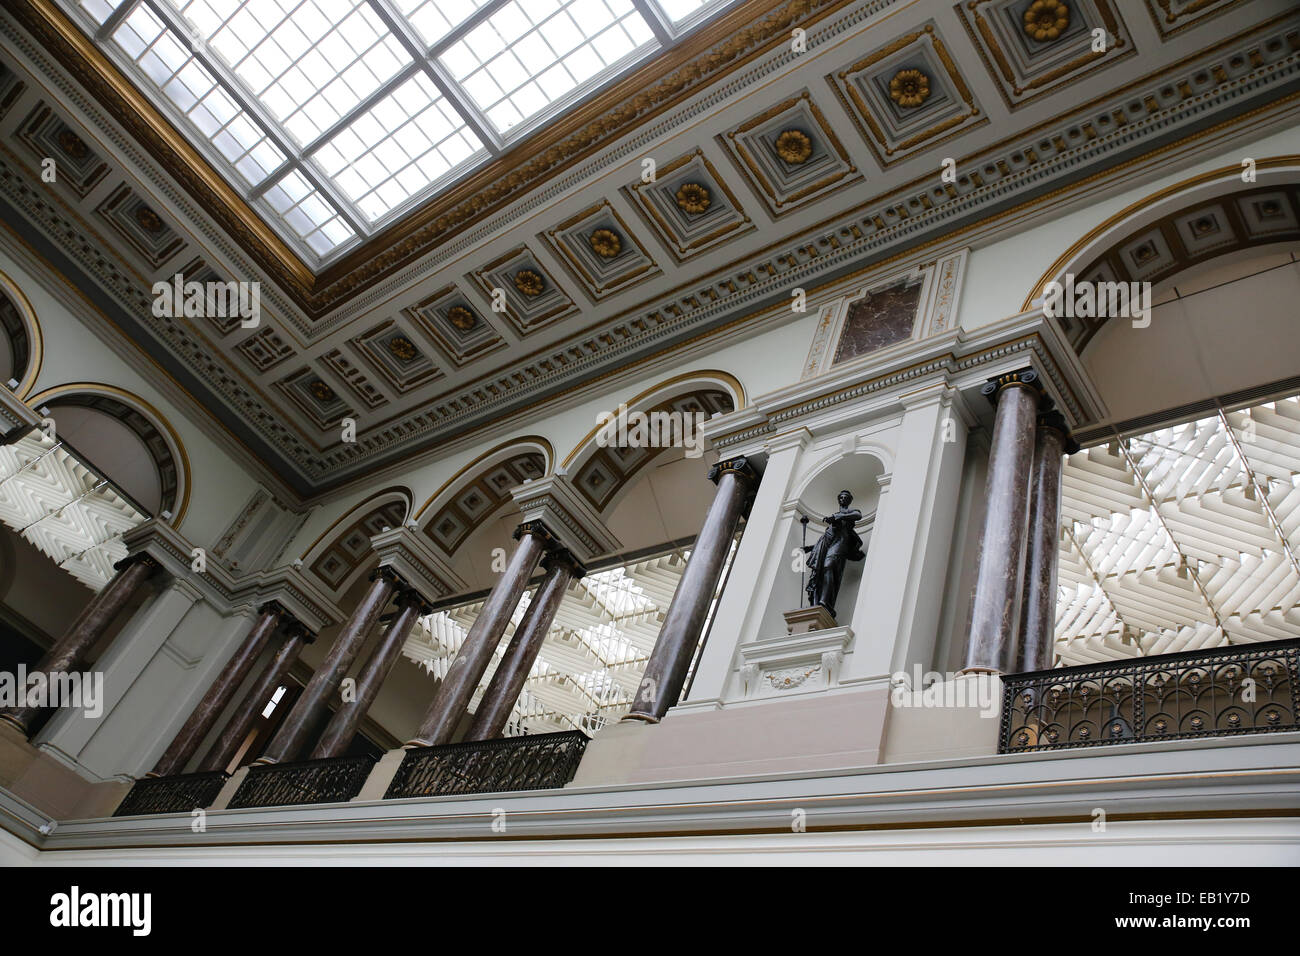 inside fine arts museum belgium brussels Stock Photo